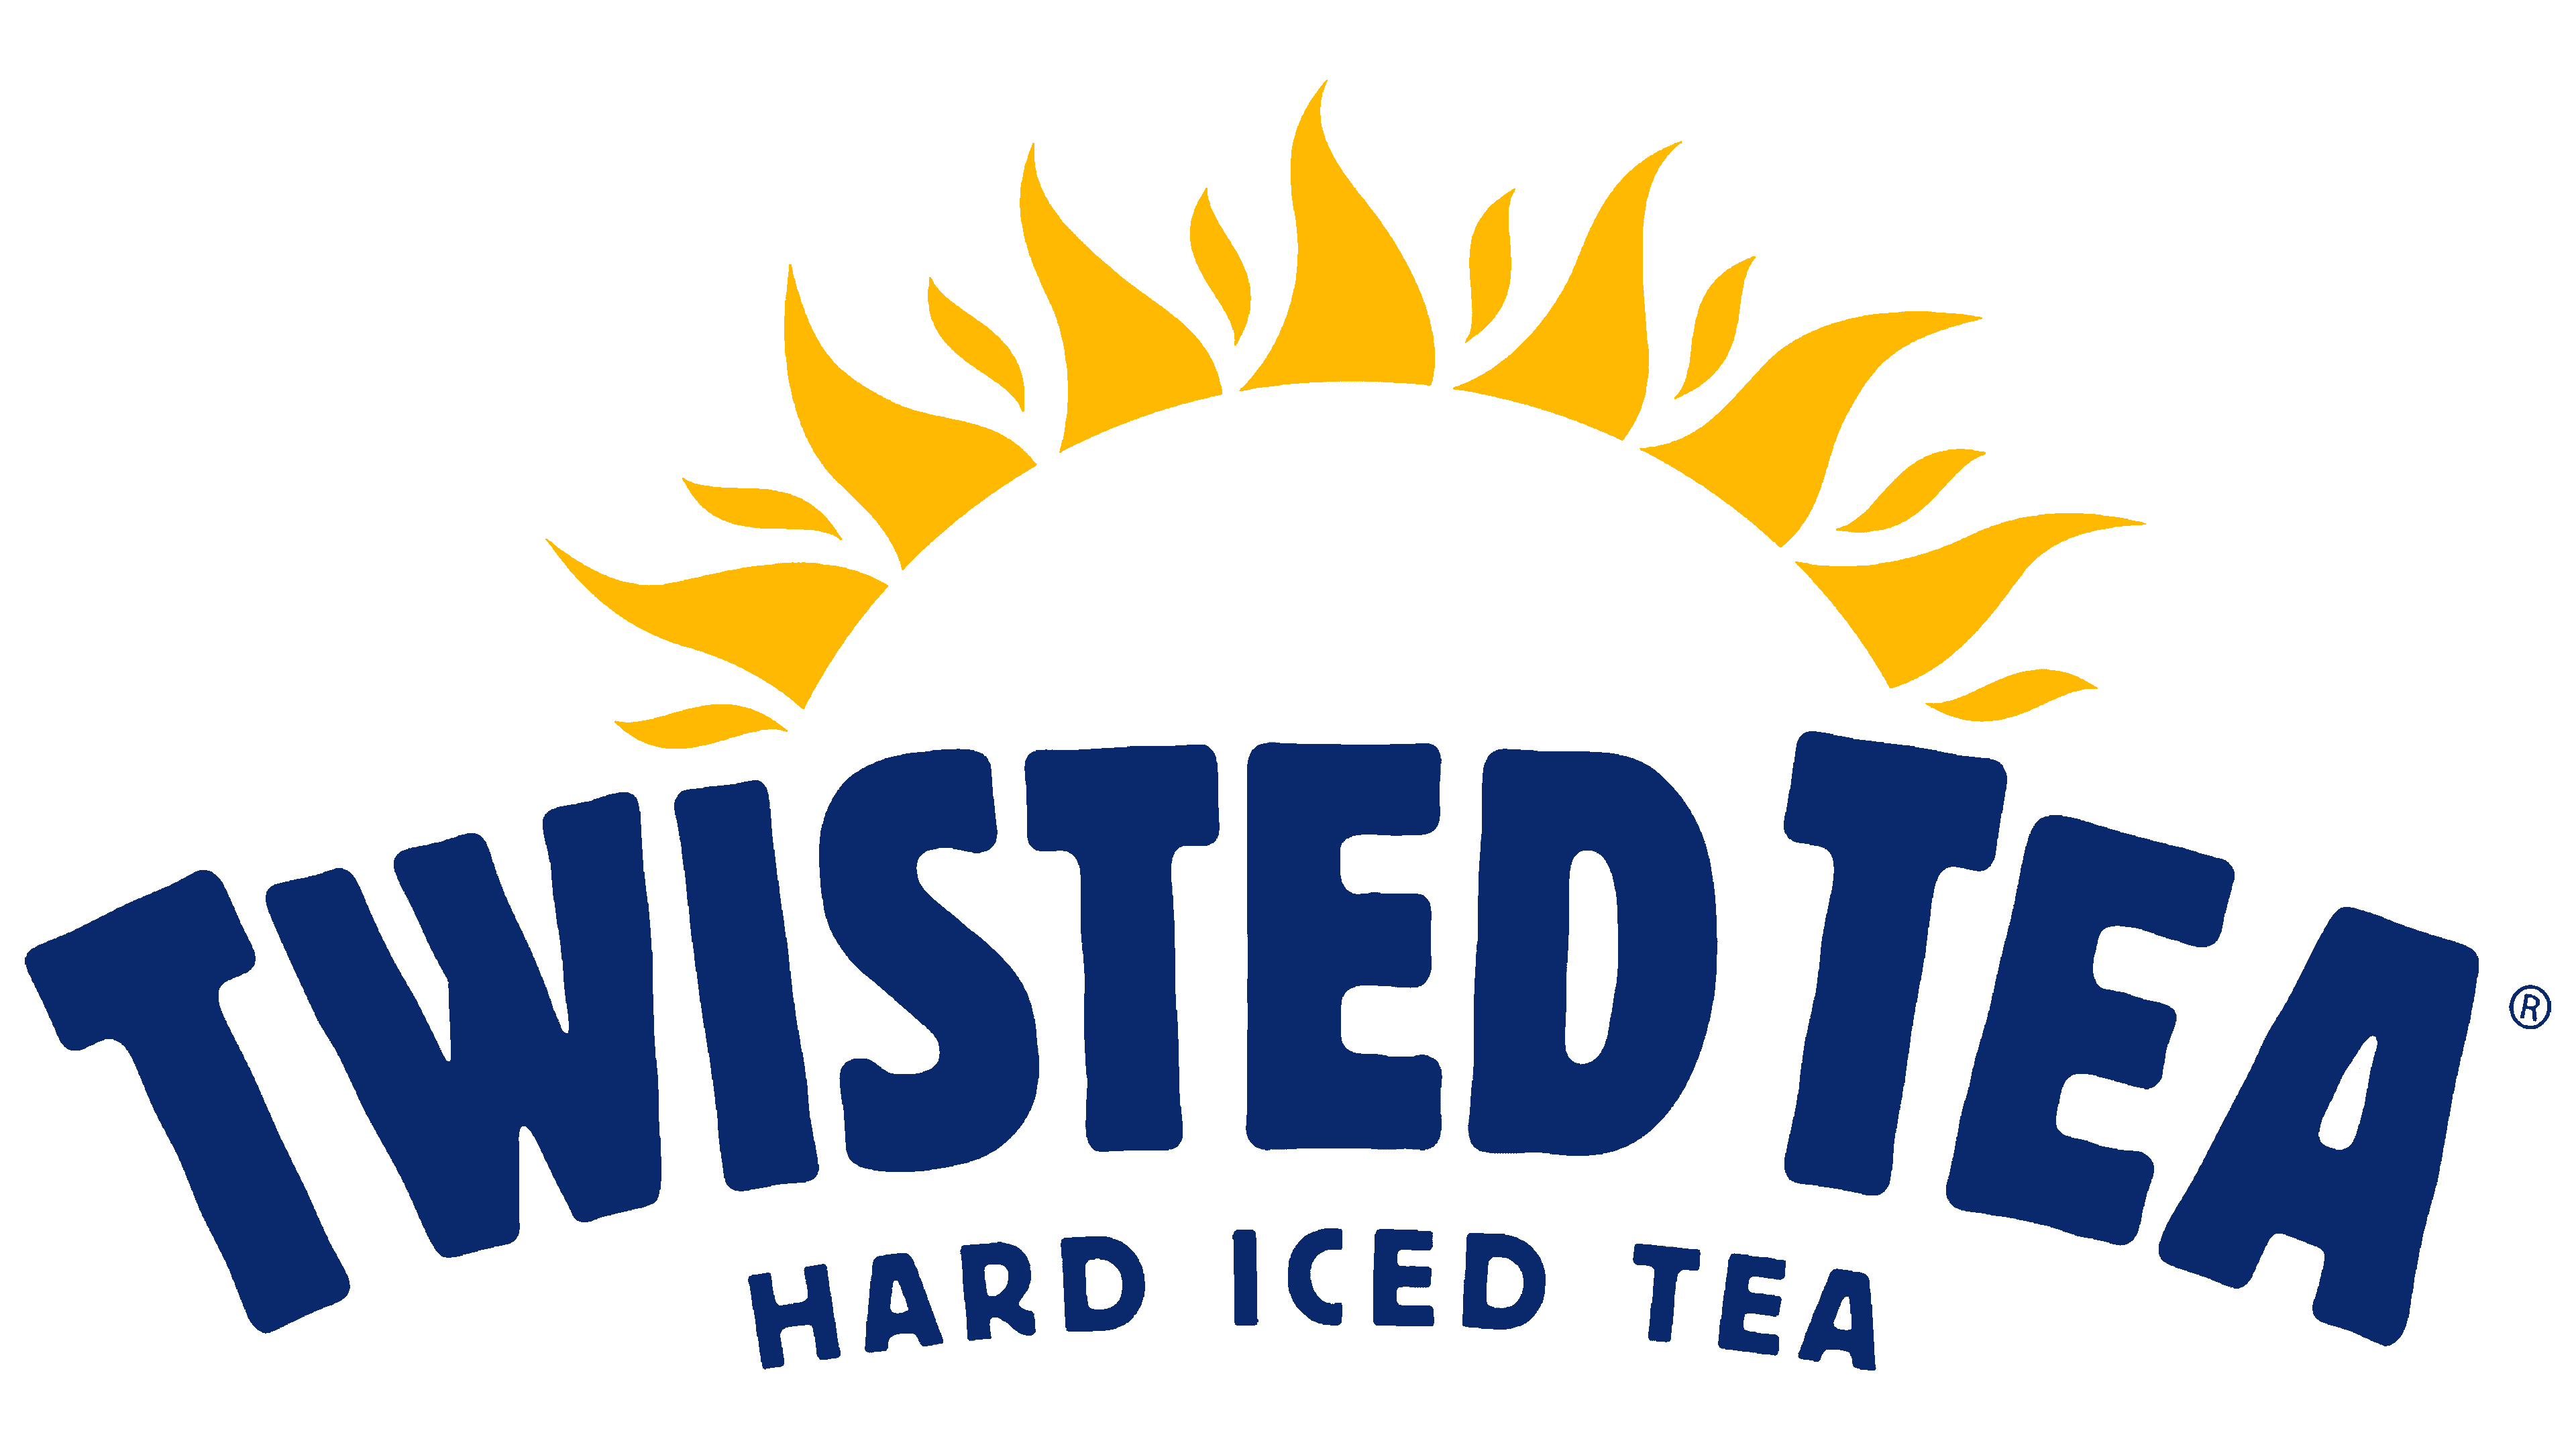 Twisted Tea Logo